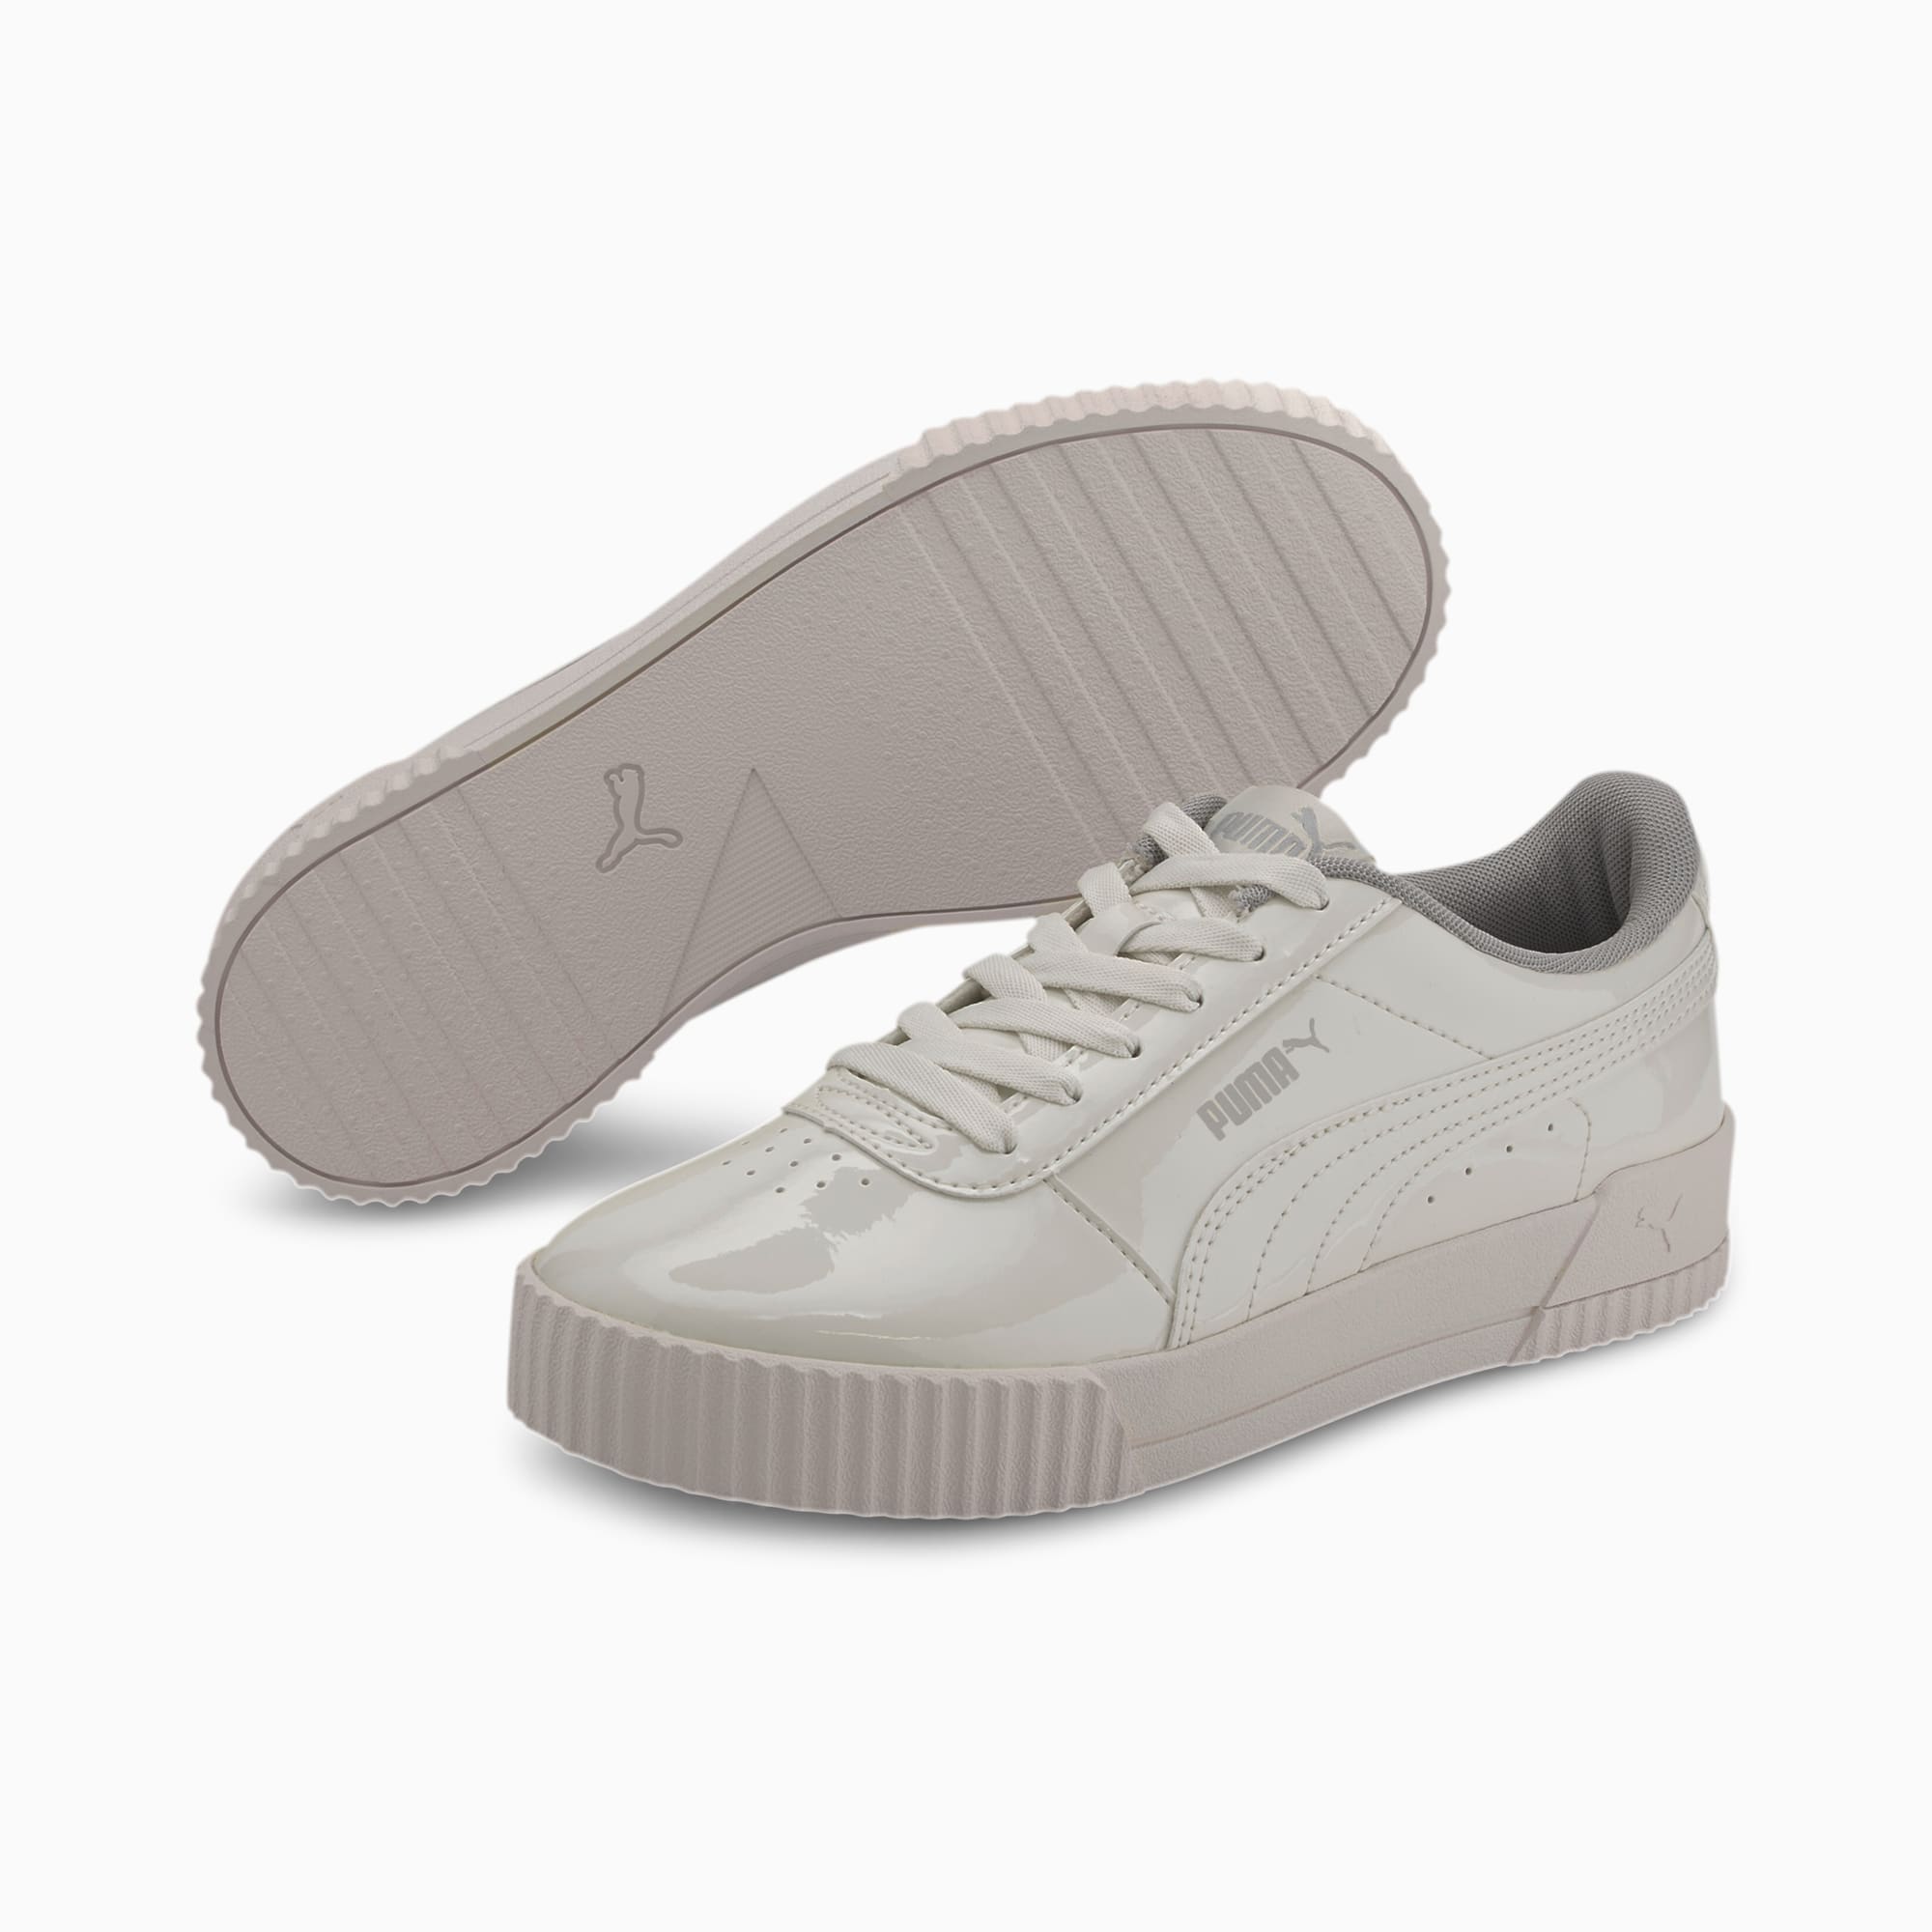 gray puma women's sneakers